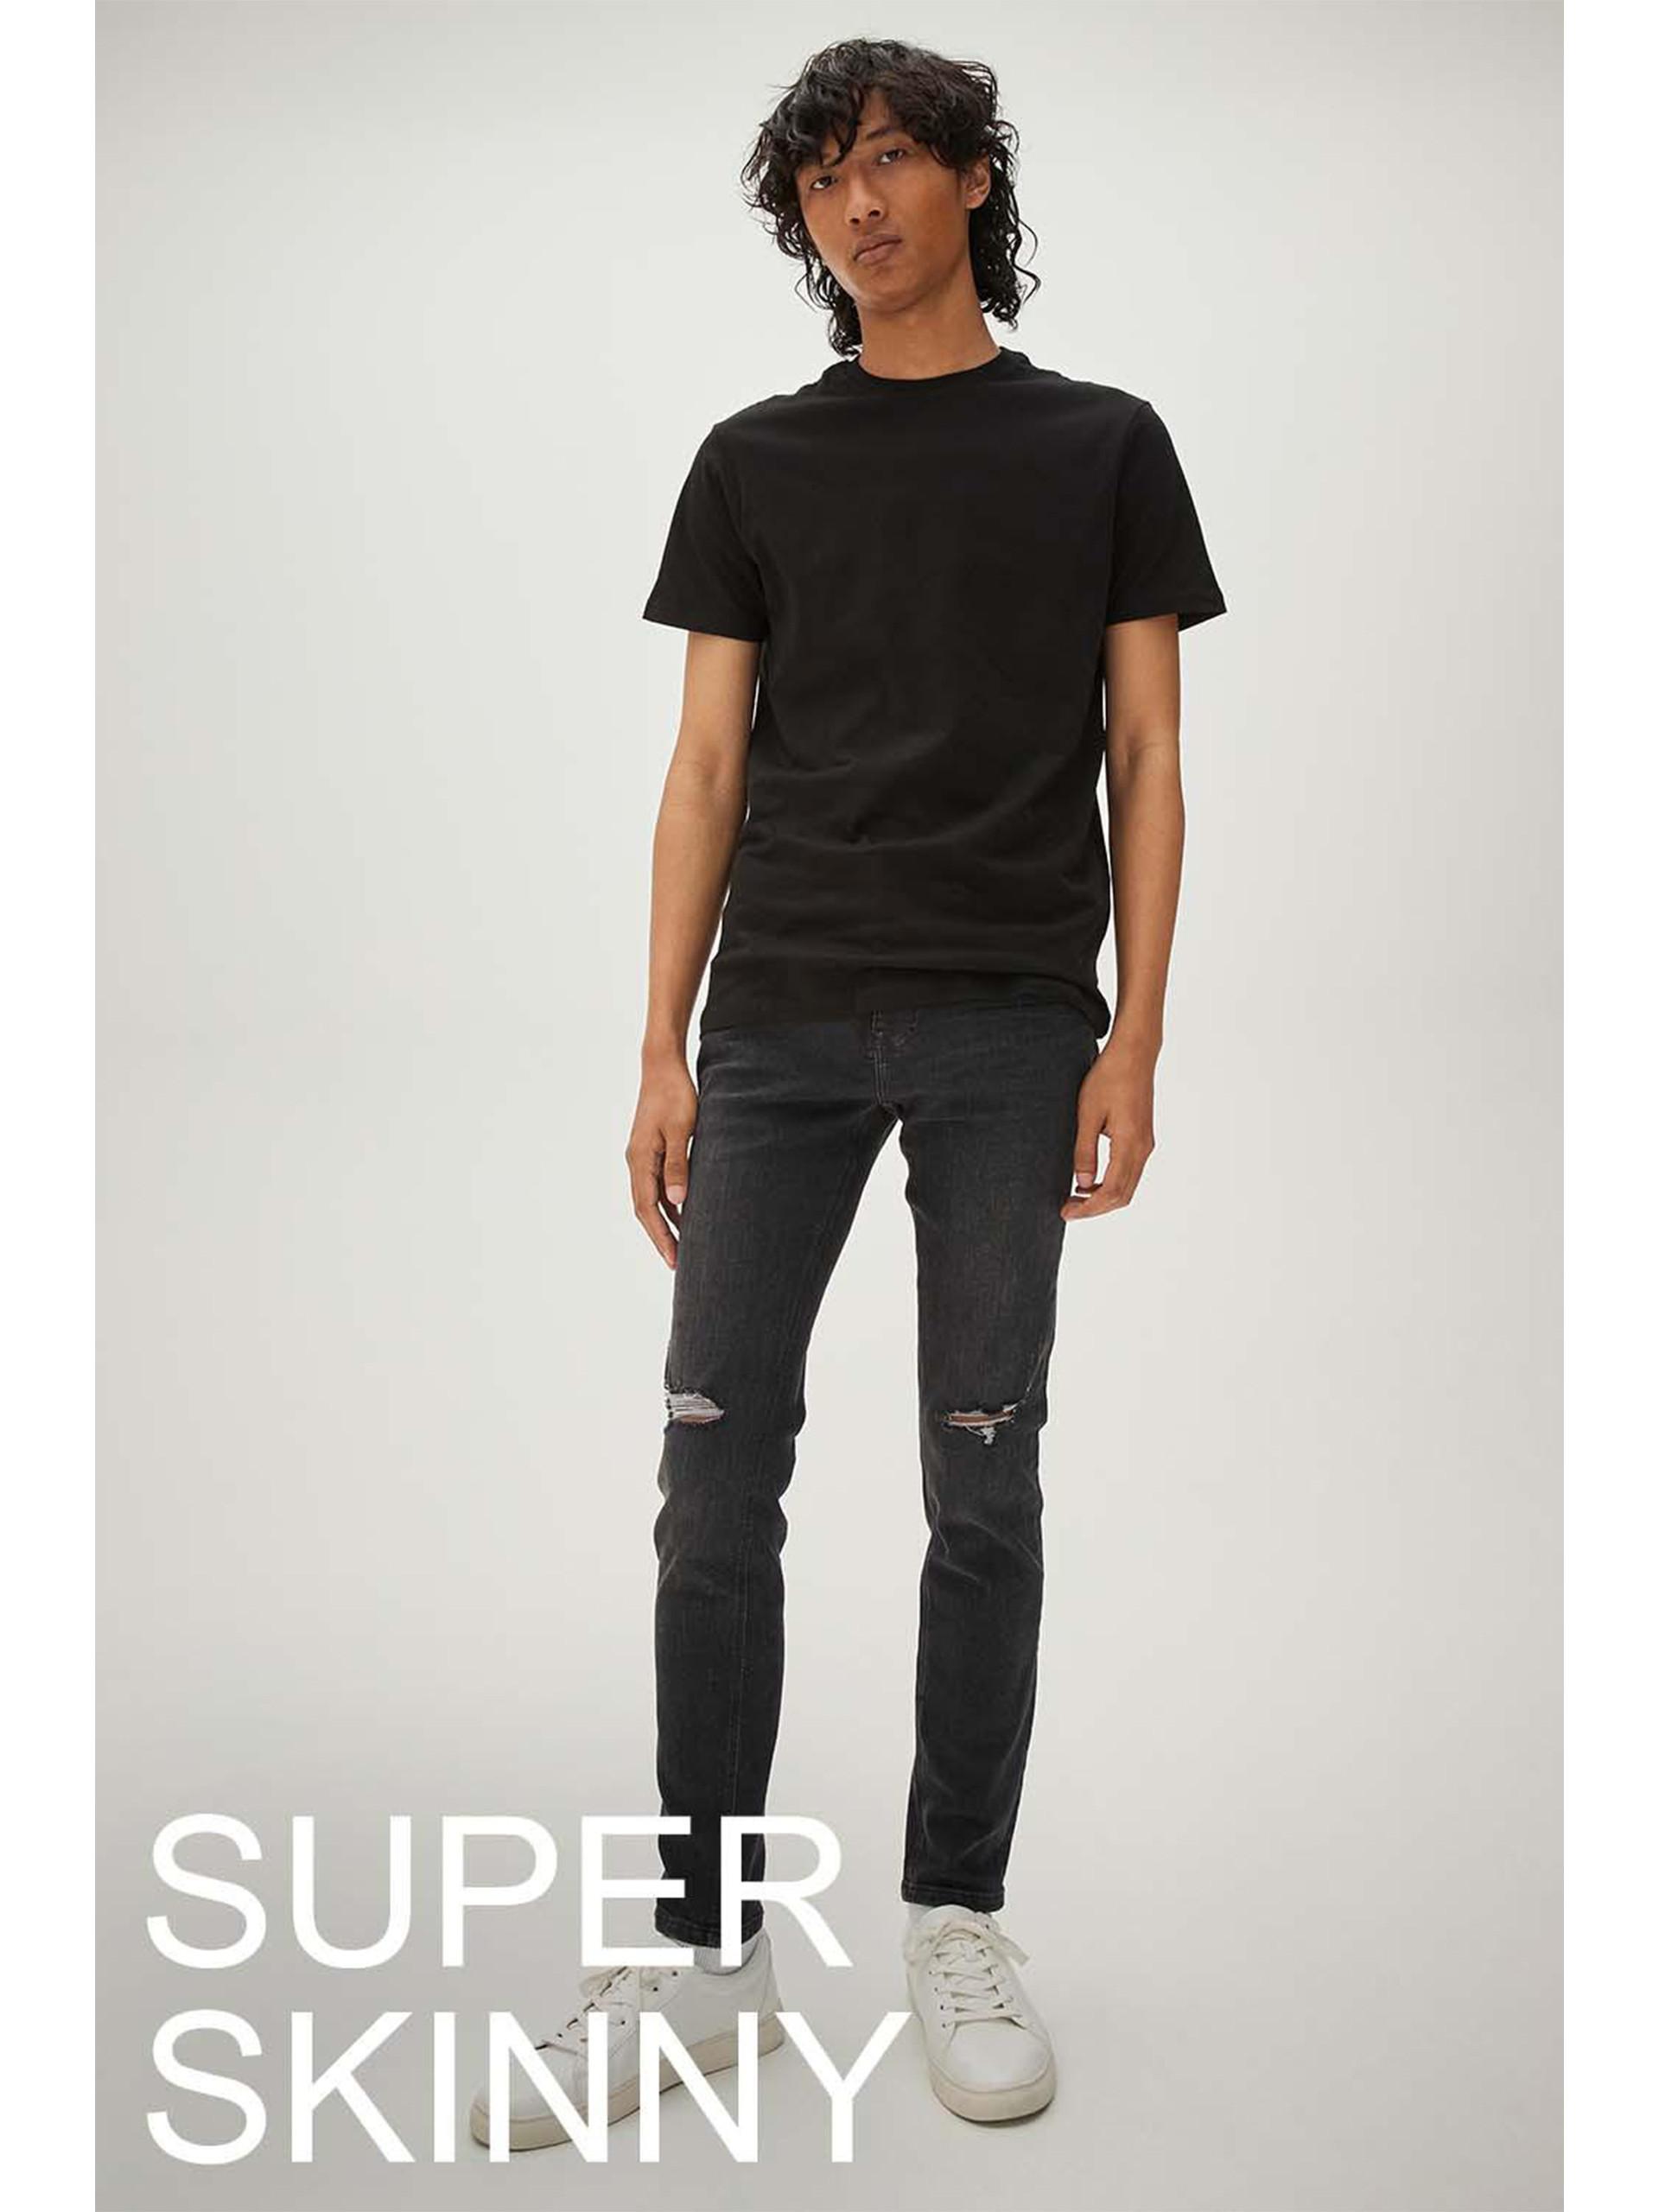 Model wears ripped knee super skinny jeans in black